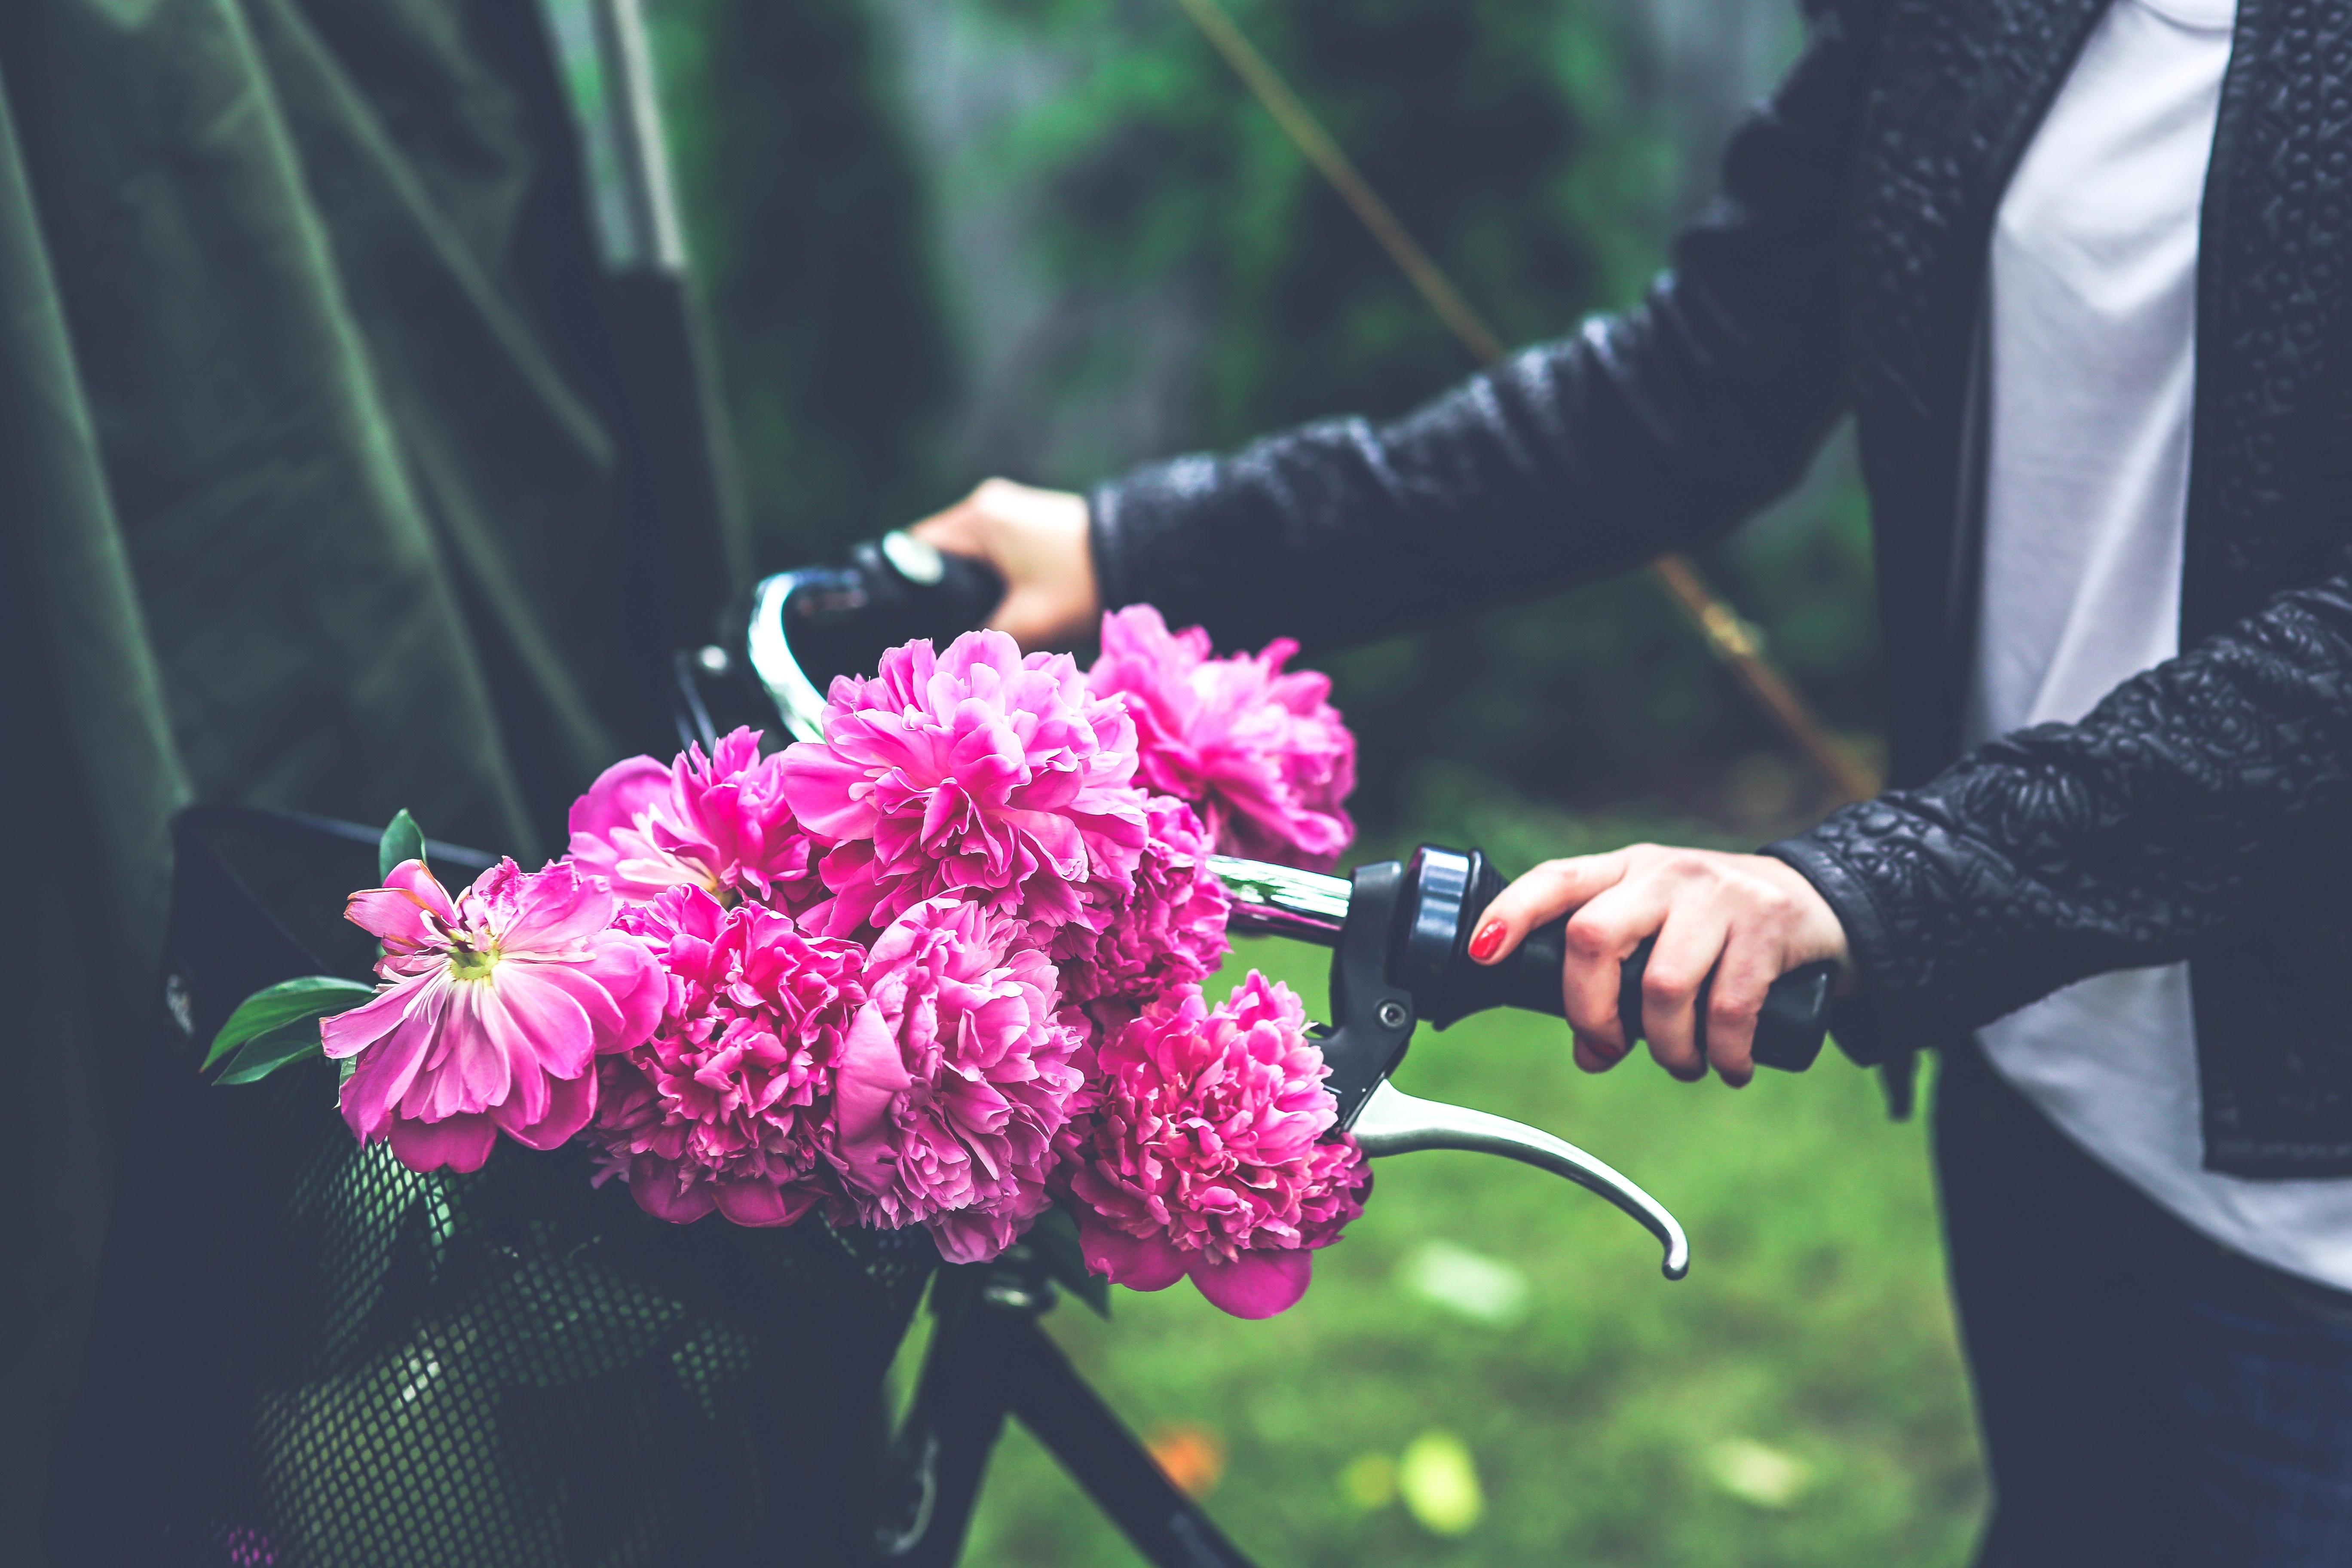 Bike, Flowers, Flower, Basket, Bicycle, flower, human hand